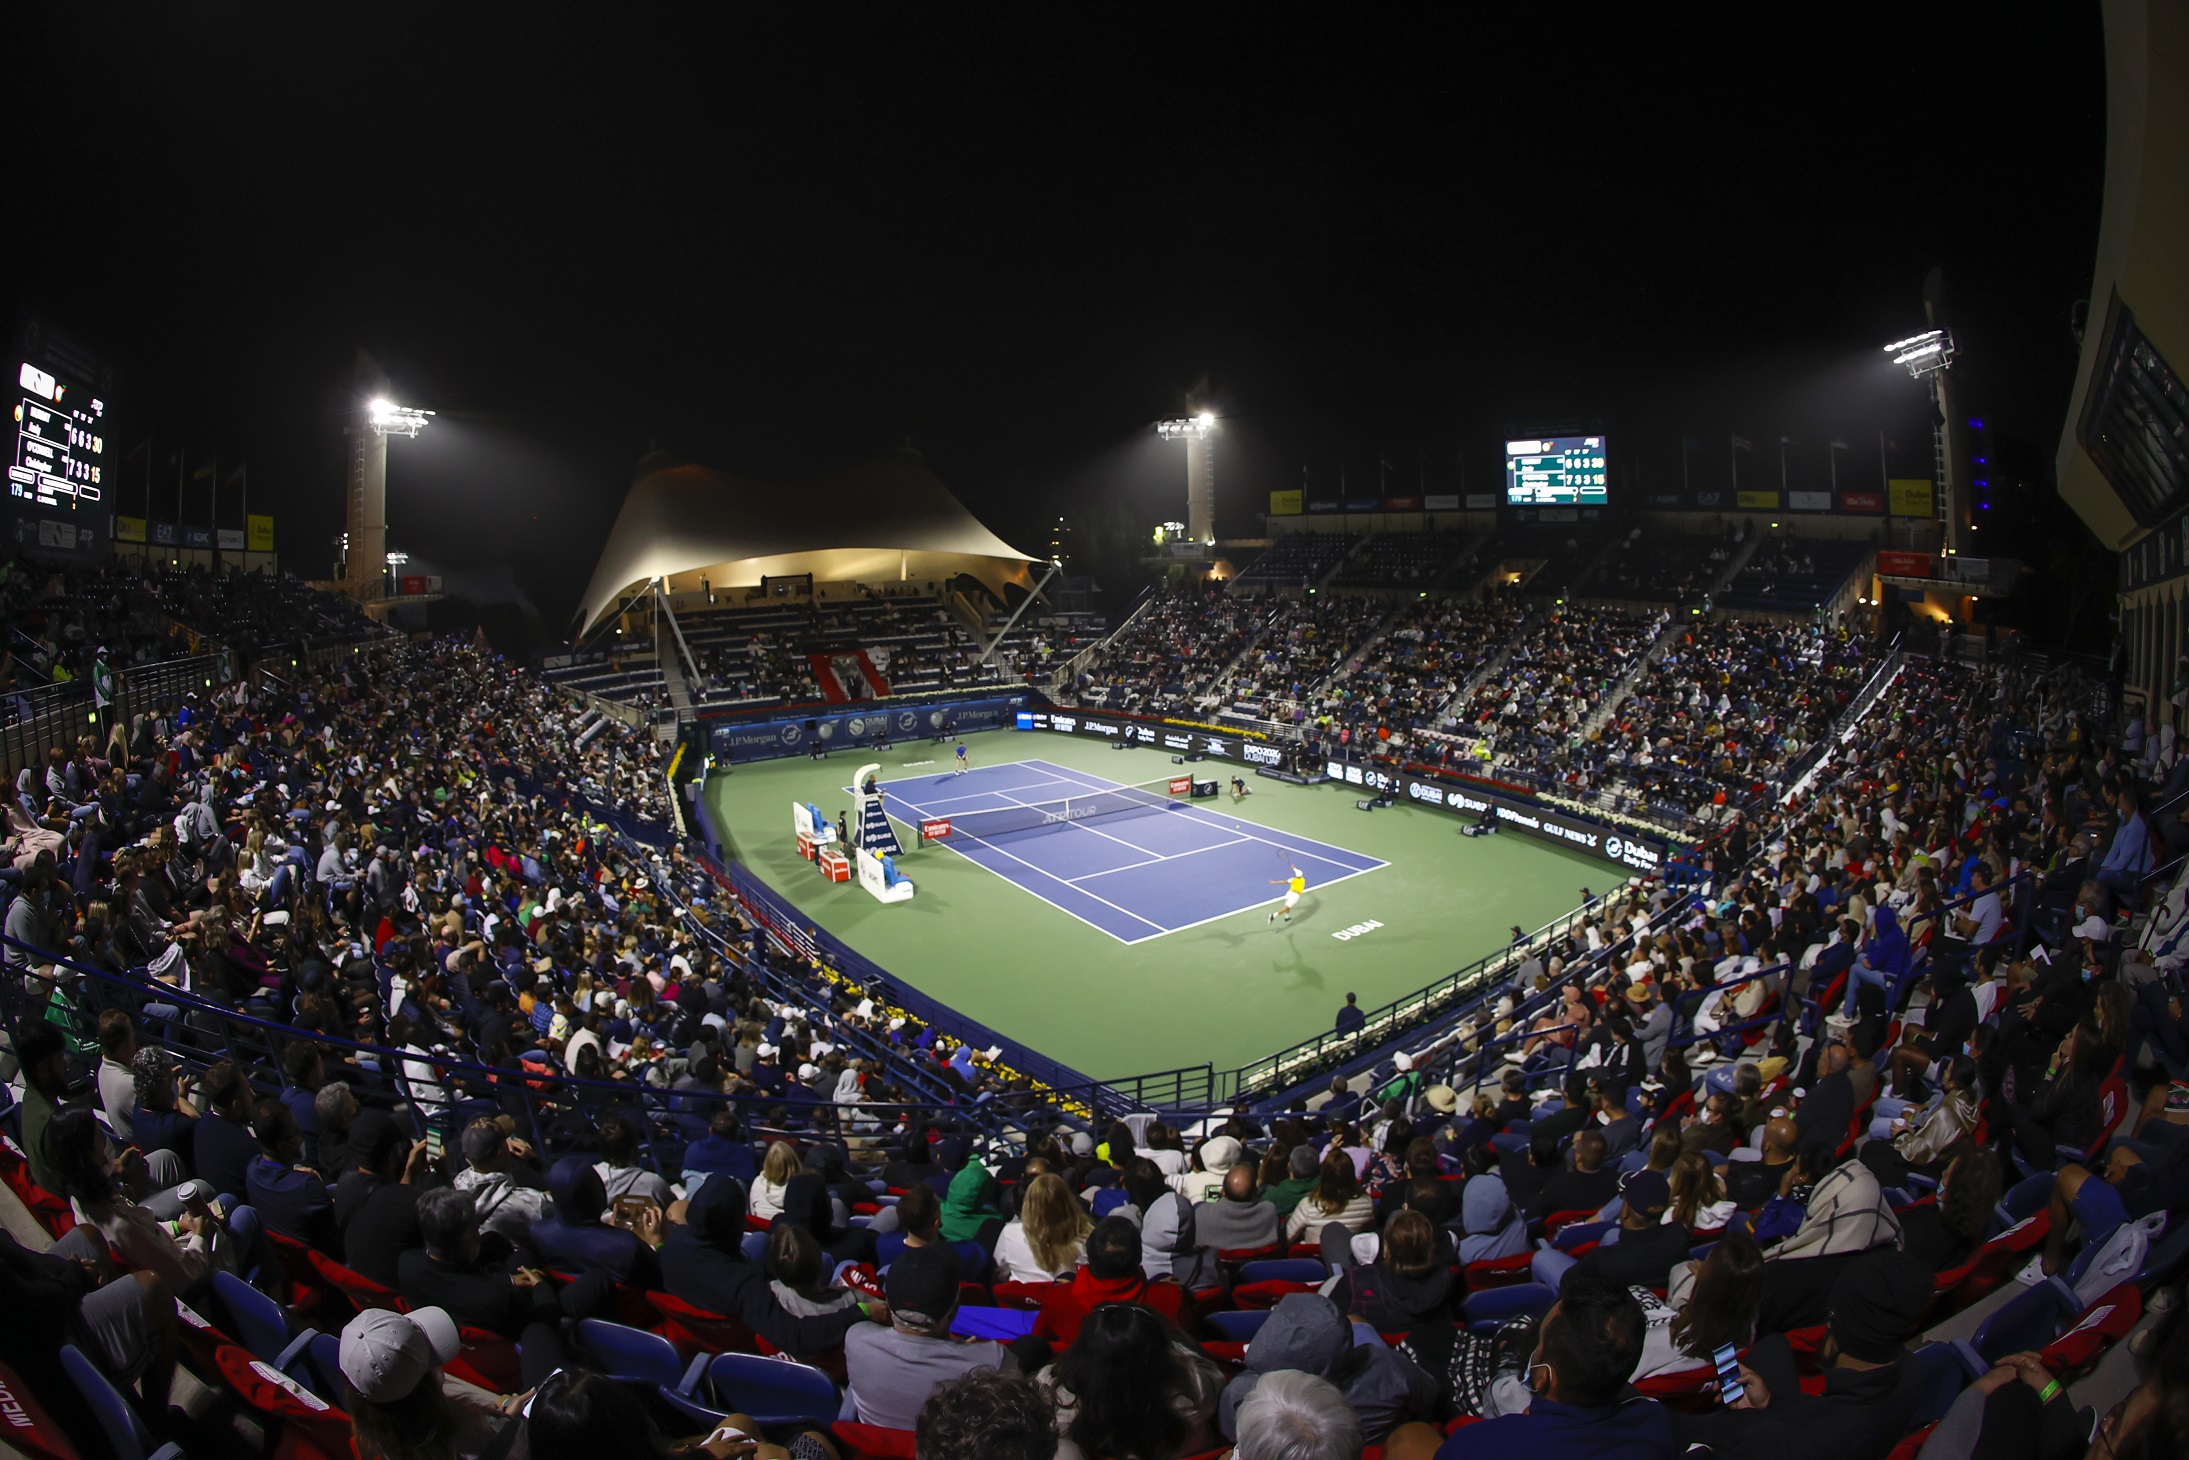 Stadium - Dubai Duty Free Tennis Championships